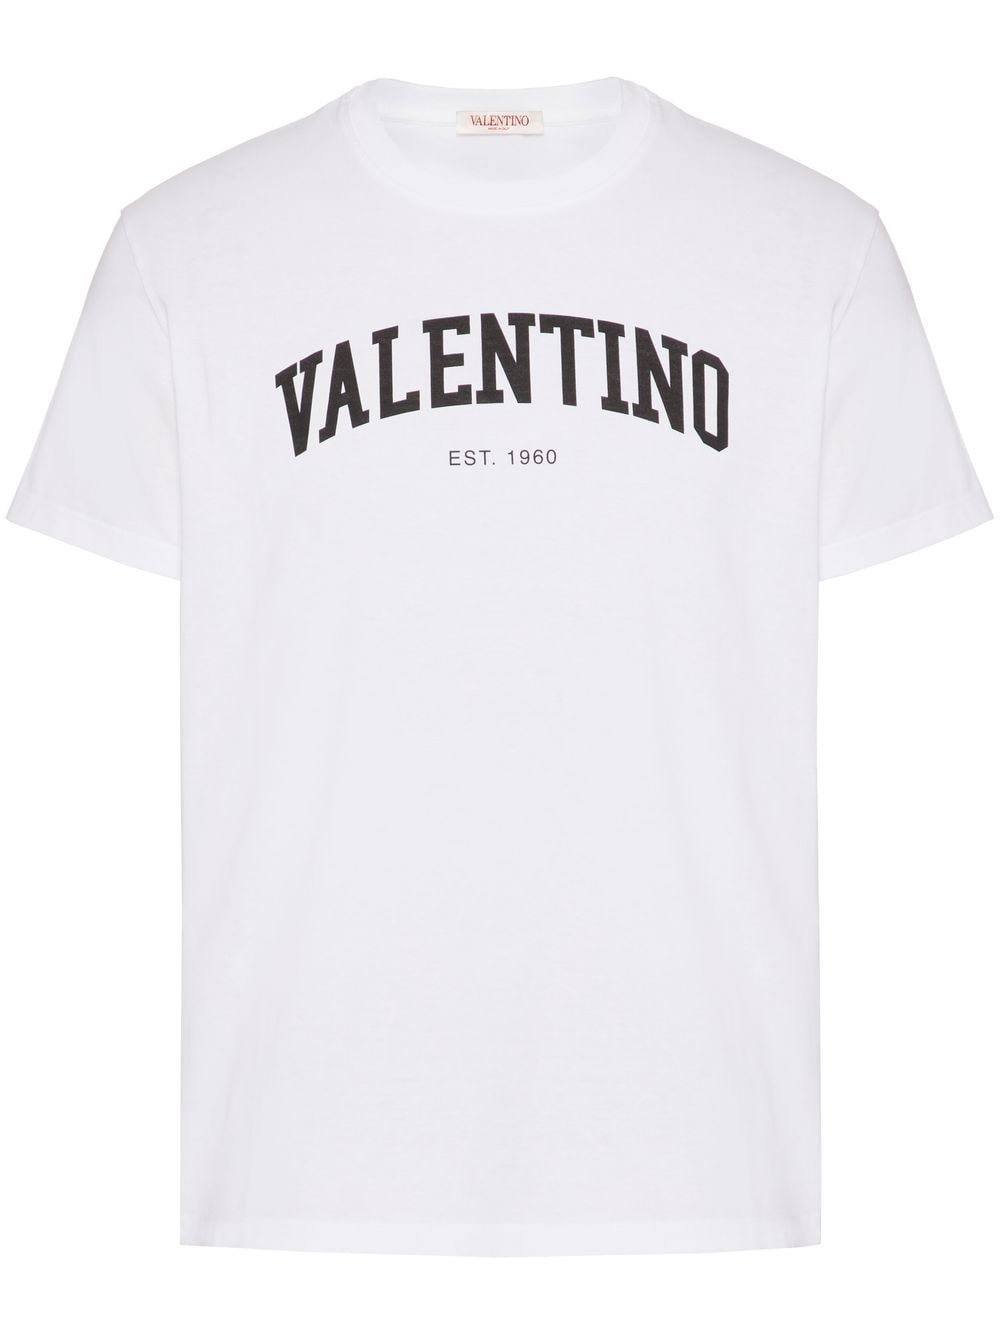 Valentino Garavani White T-Shirt with Black Logo Short Sleeves